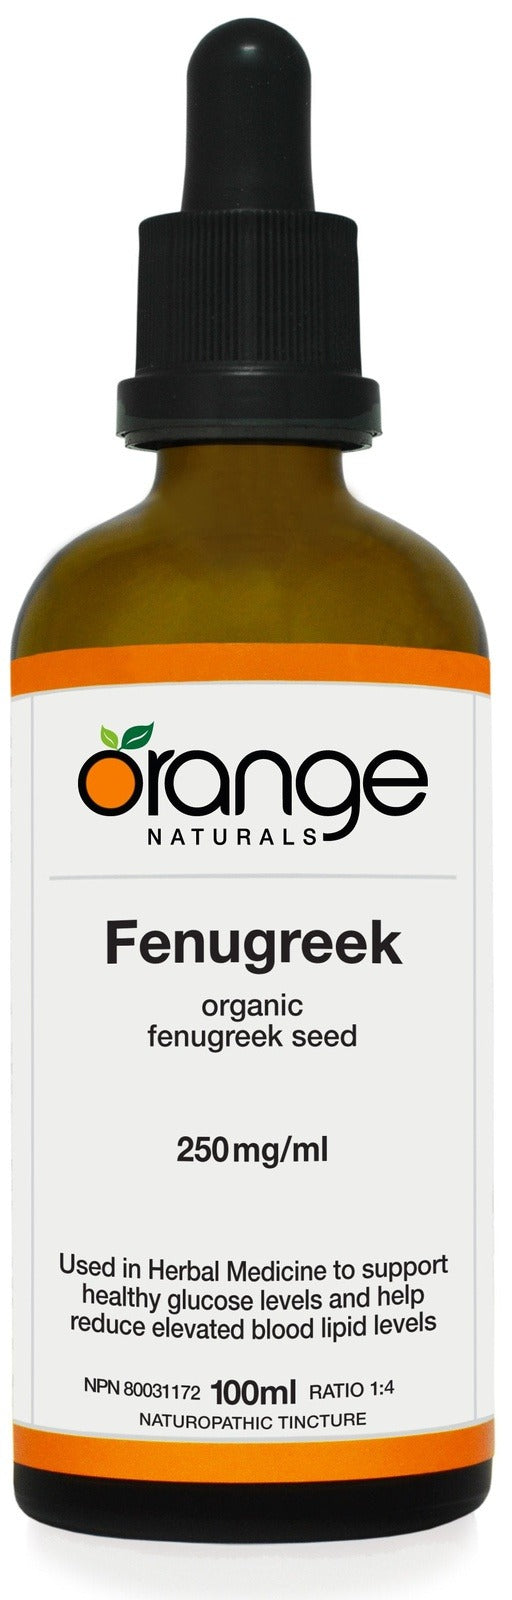 Orange Naturals Fenugreek 250 mg/mL 100 mL Image 1